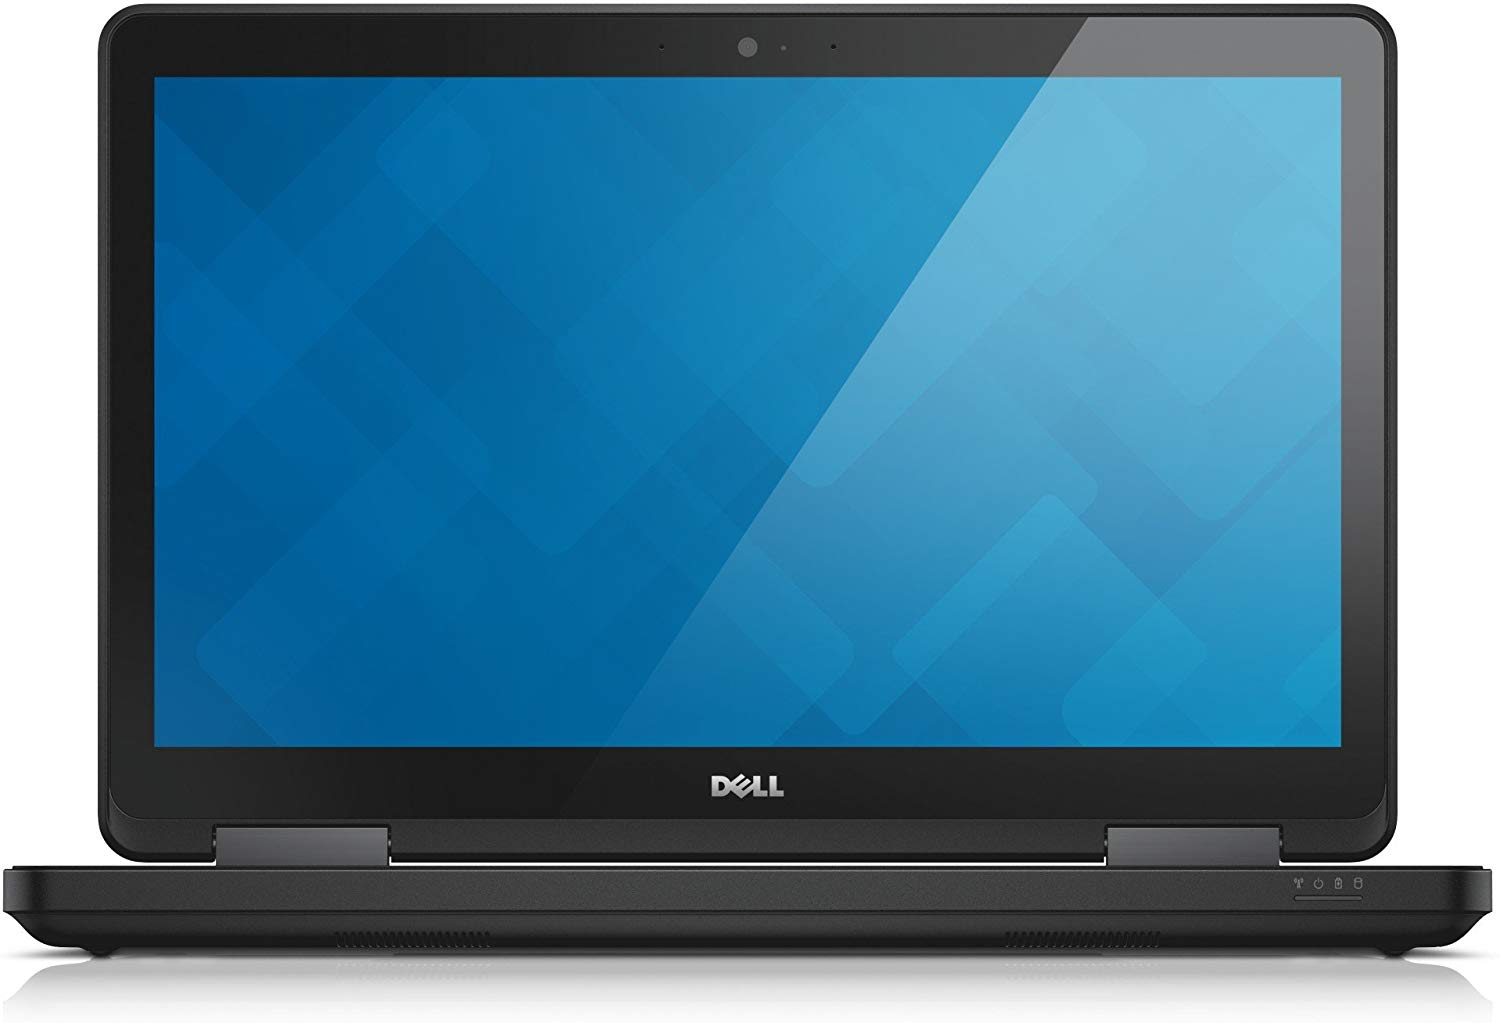 Dell Latitude E5540 15" Laptop, 1.9 GHz Intel i5 Dual Core Gen 4, 4GB RAM, 500GB SATA HD, Windows 10 Home 64 Bit (Renewed)